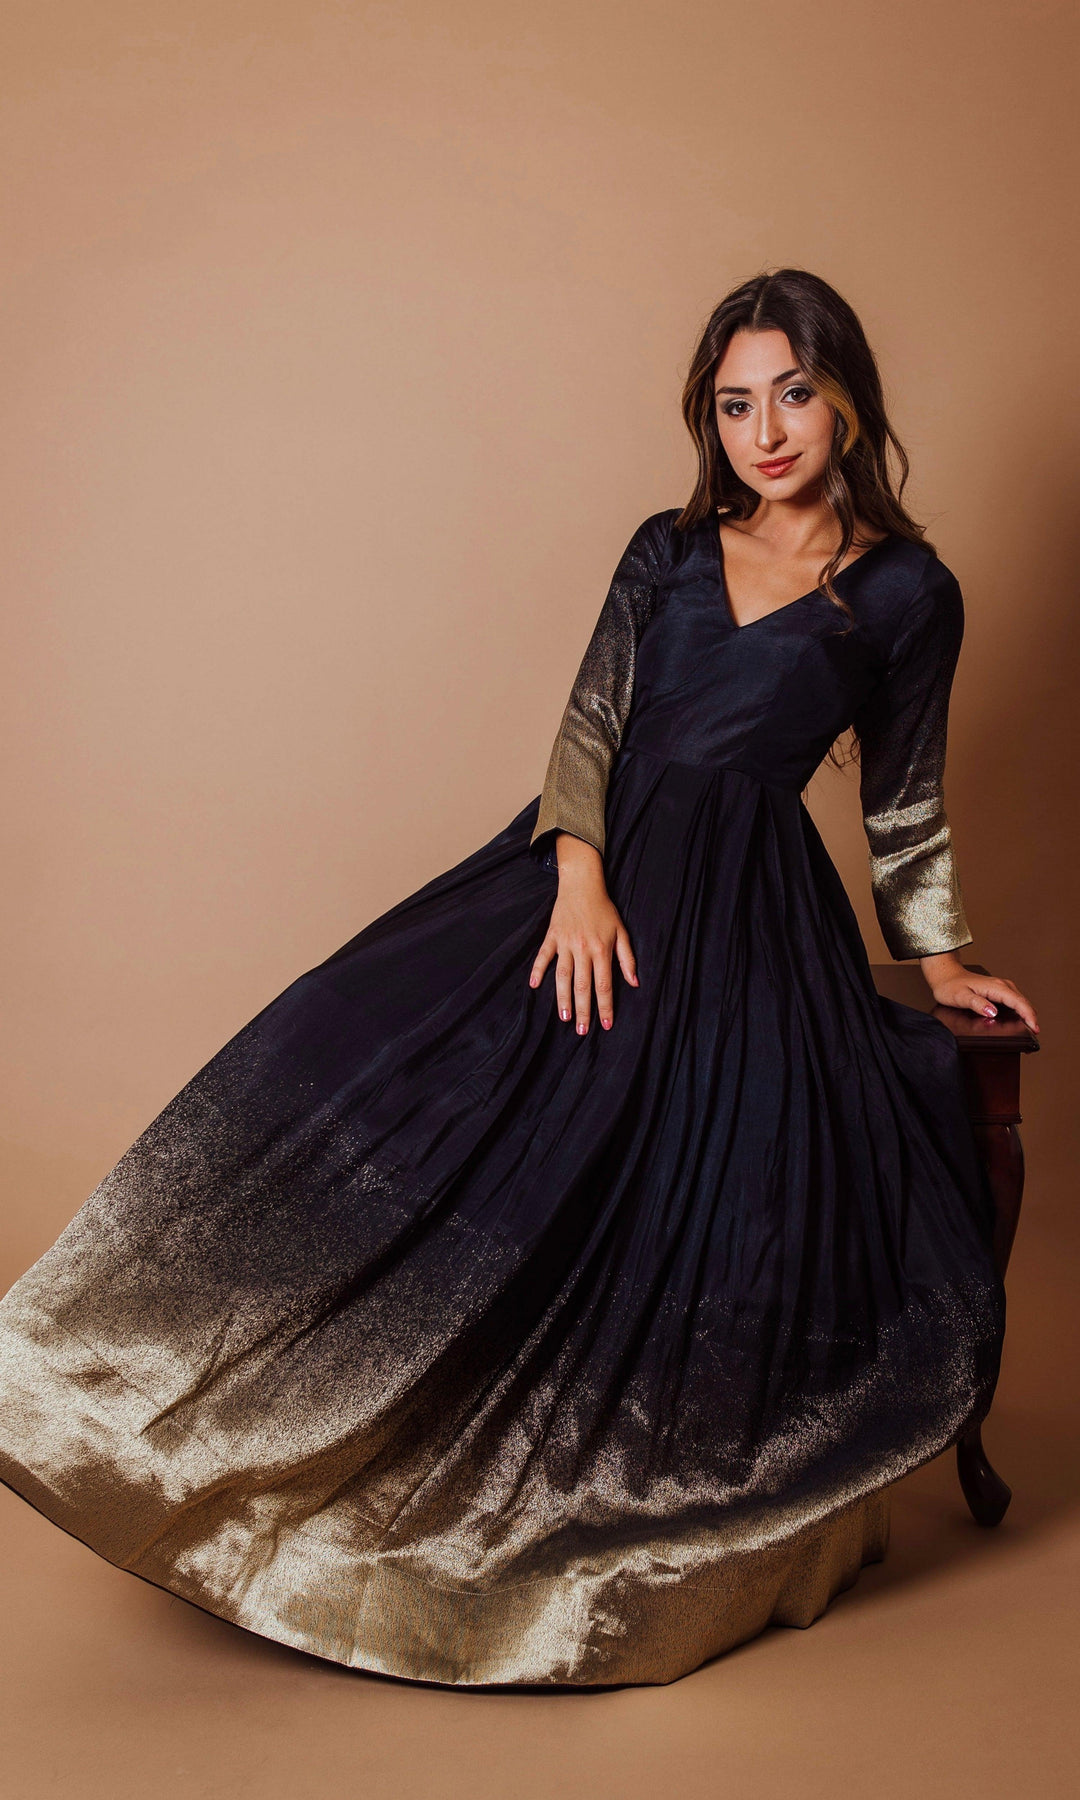 product_title]-[Indian dresses]-[Cocktail Dress]-[long dress]-[gown dress]